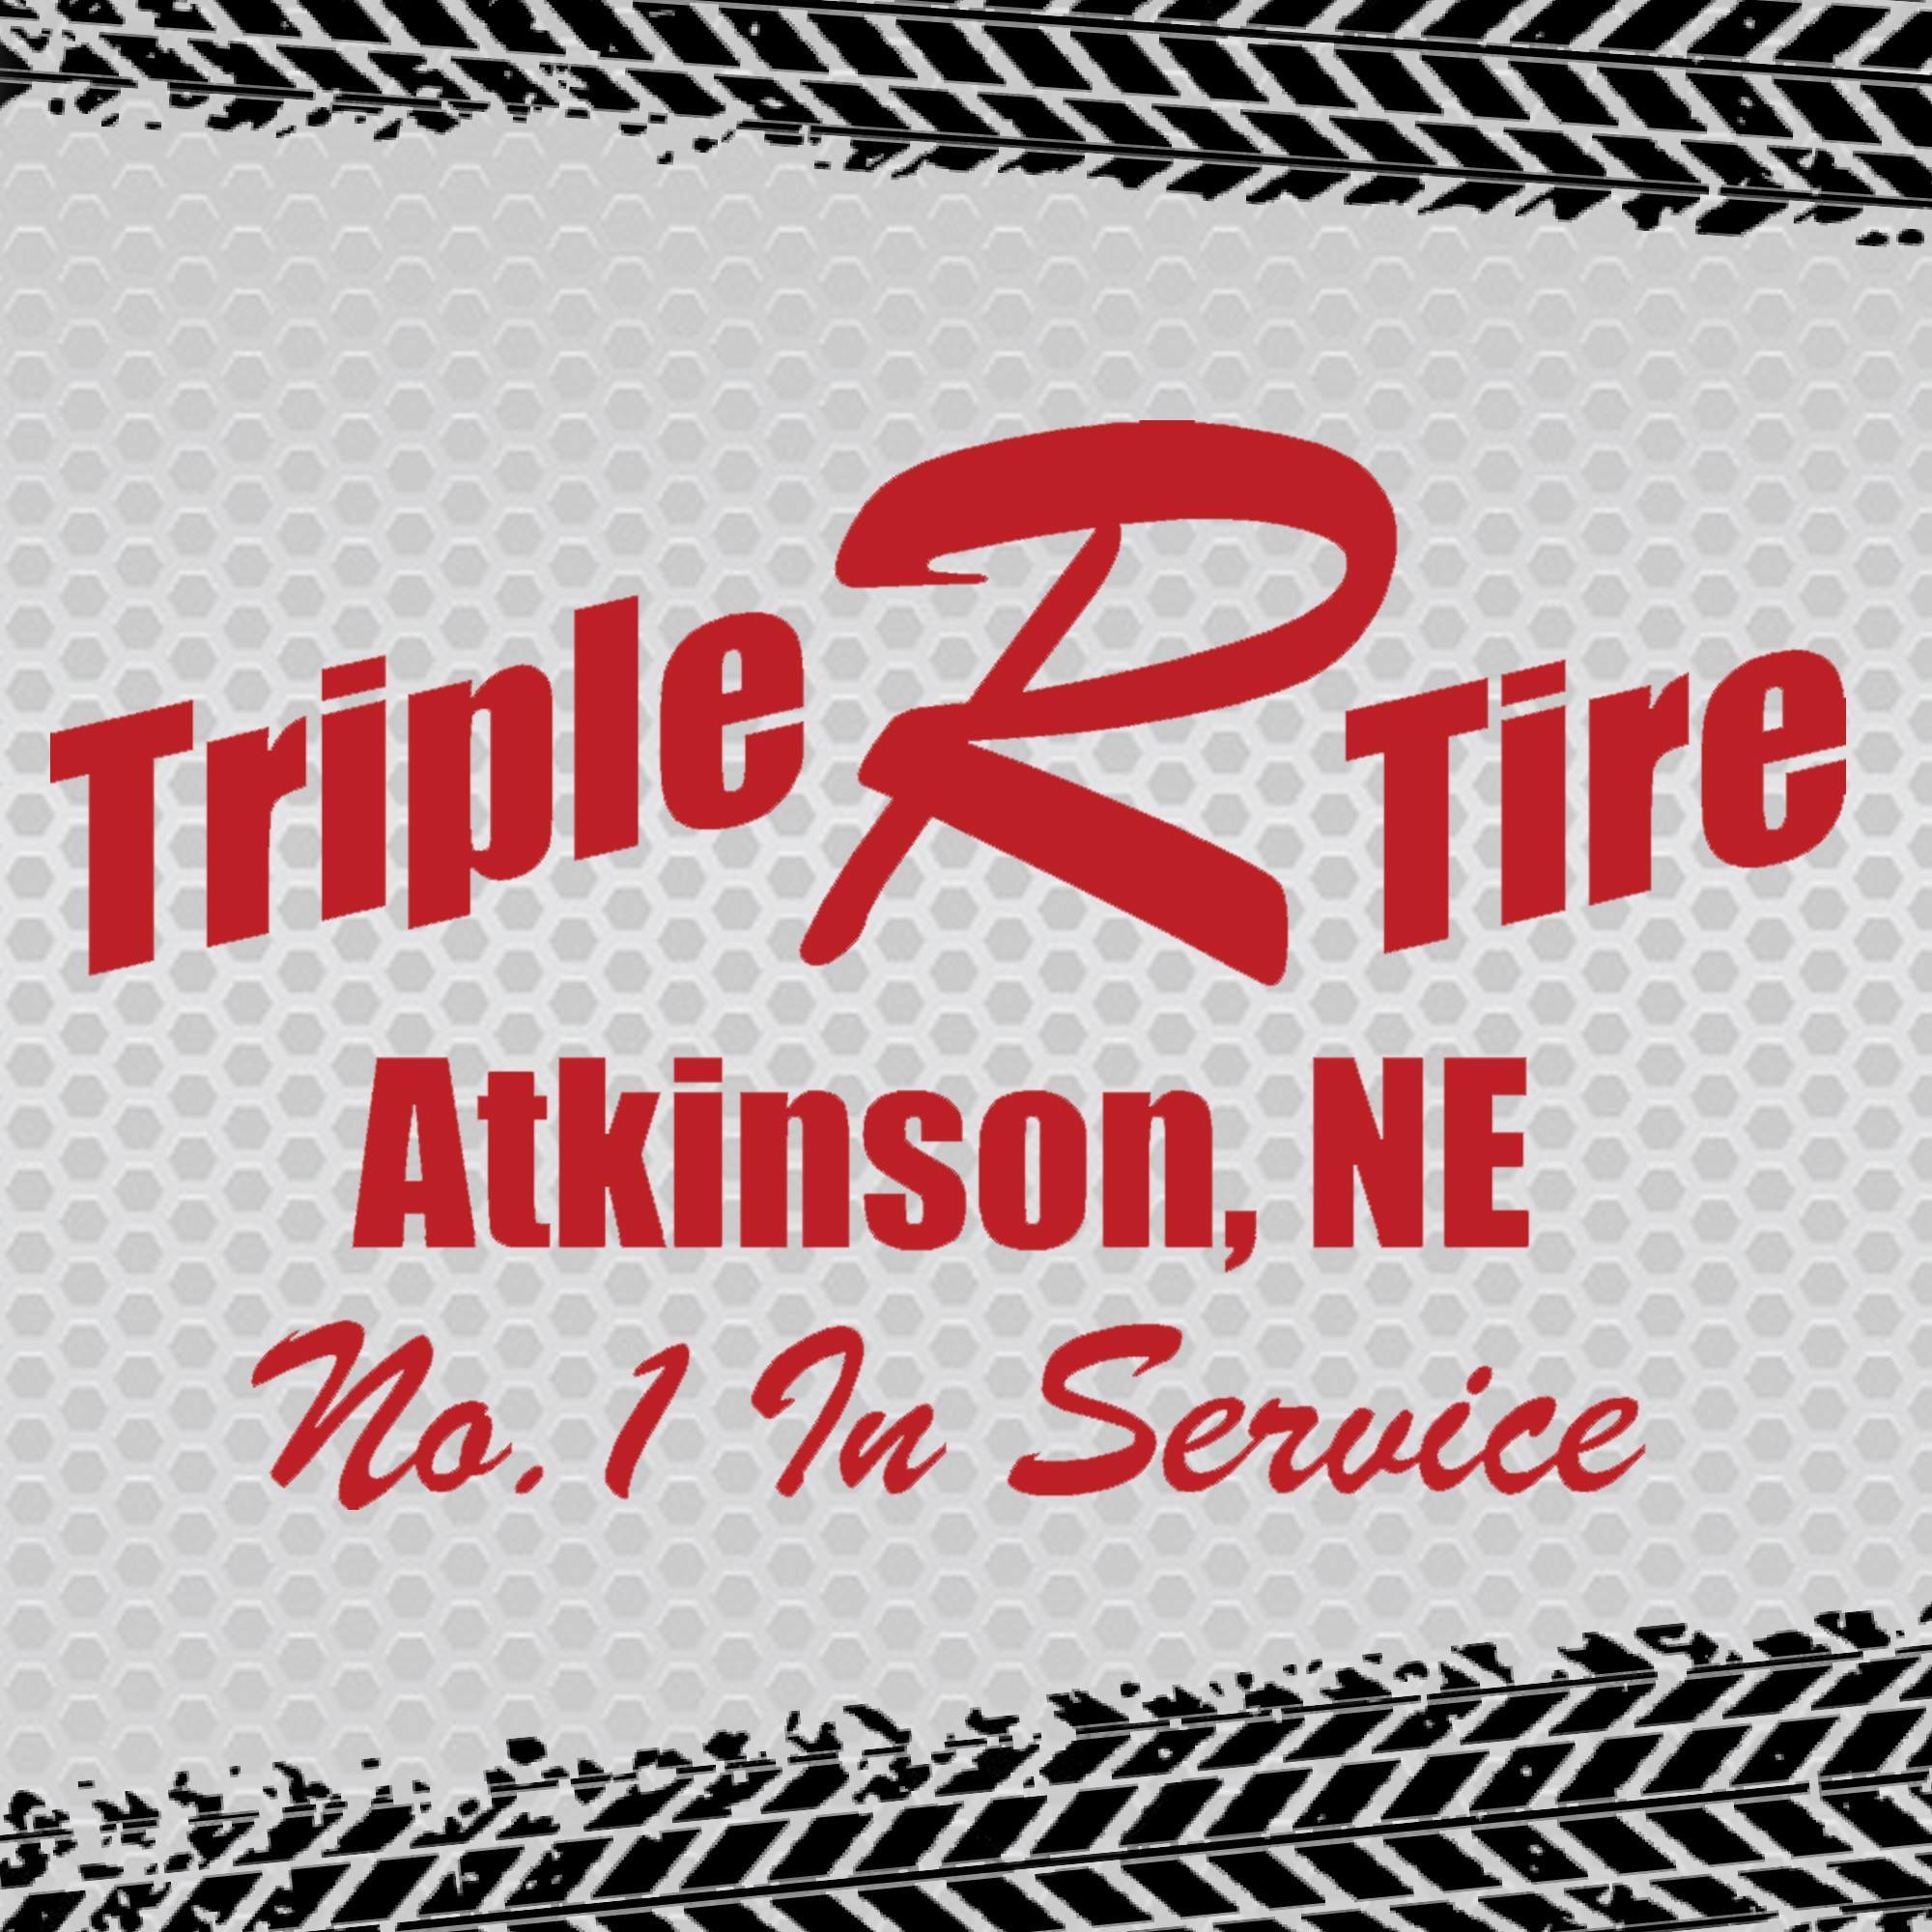 triple r tire